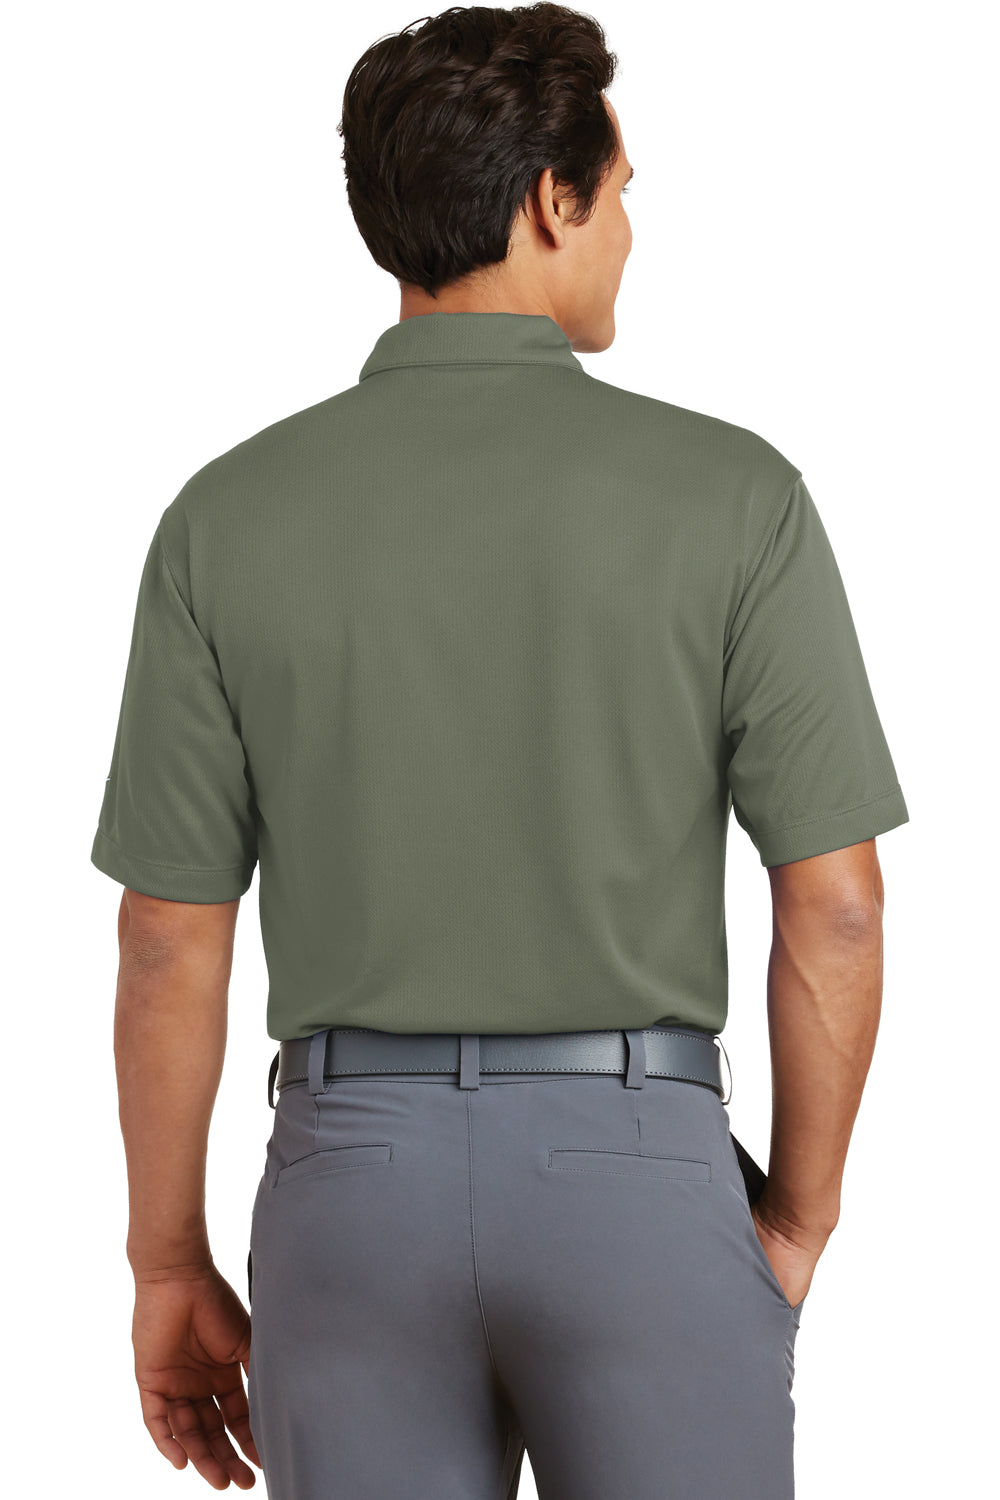 Nike 373749 Mens Dri-Fit Moisture Wicking Short Sleeve Polo Shirt Lichen Green Back